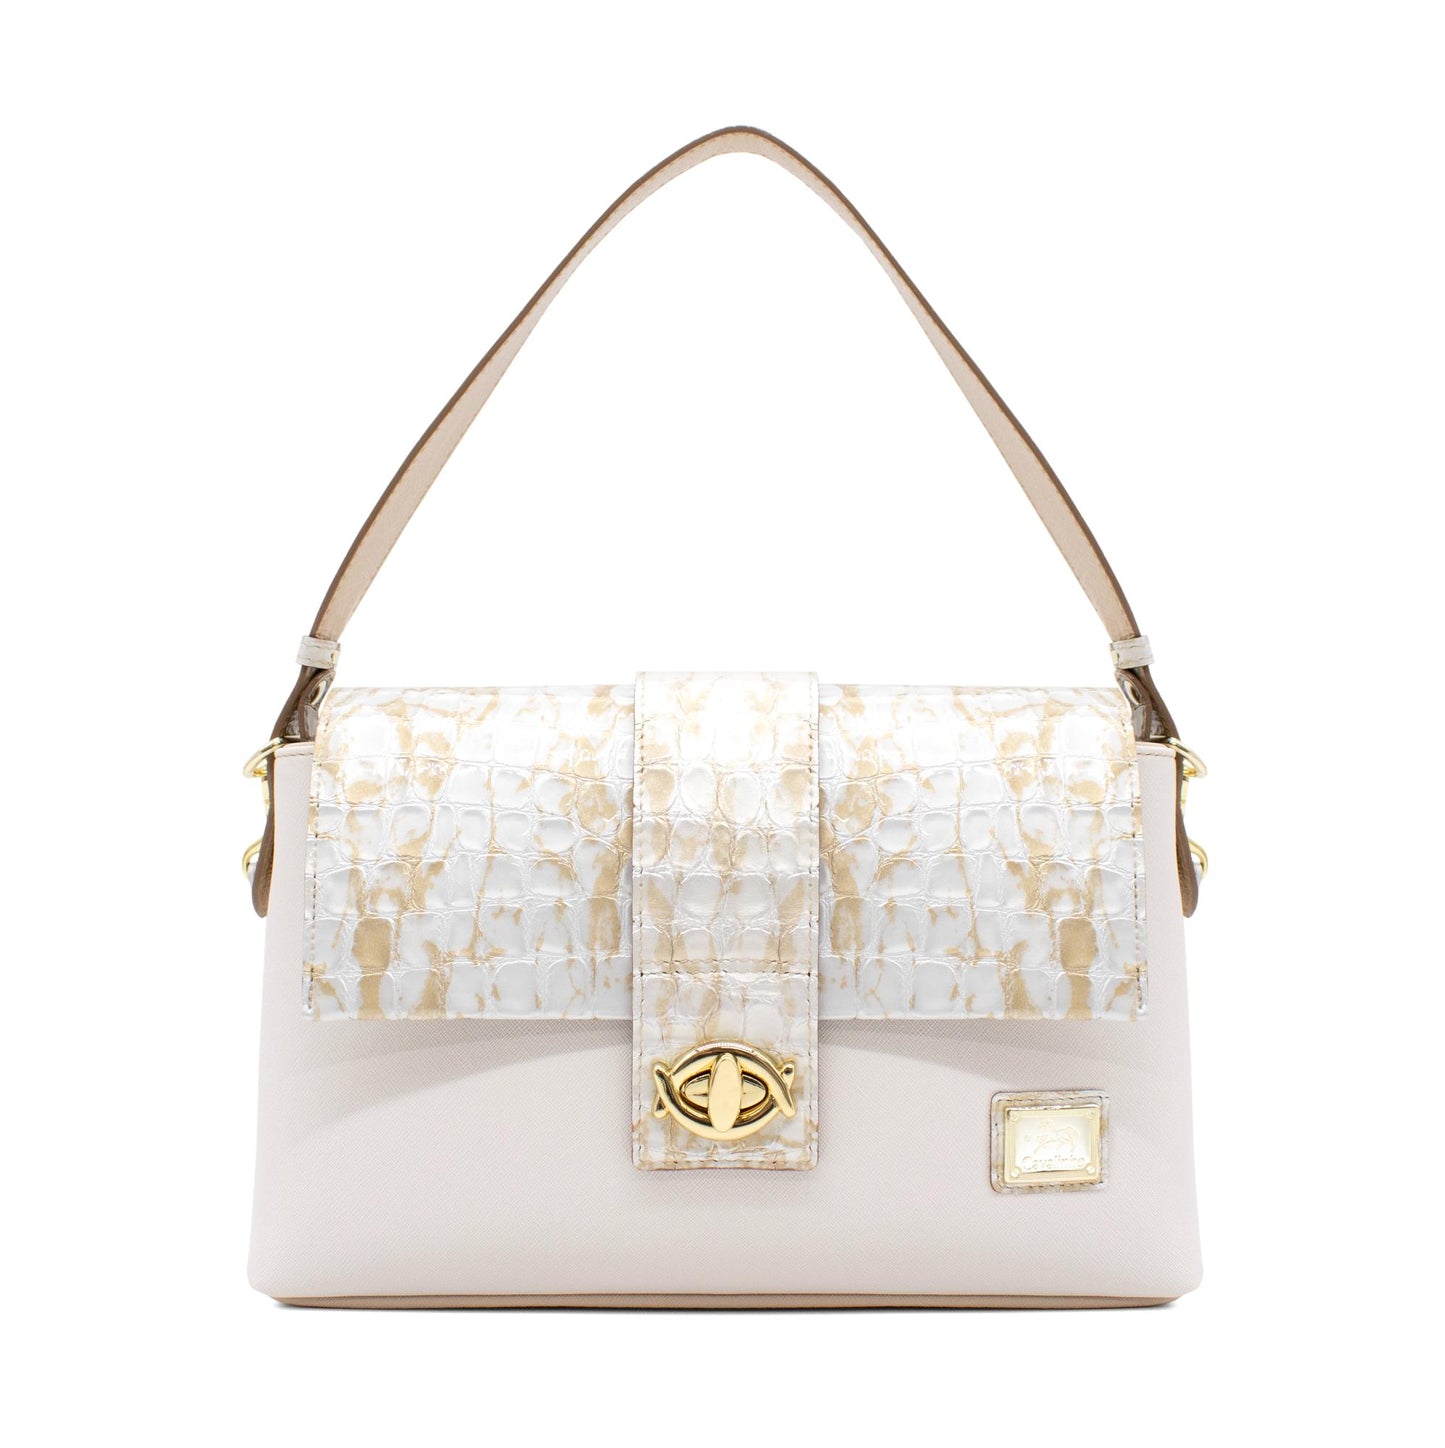 Cavalinho Mystic Handbag - Beige / White - 18460514.31_1